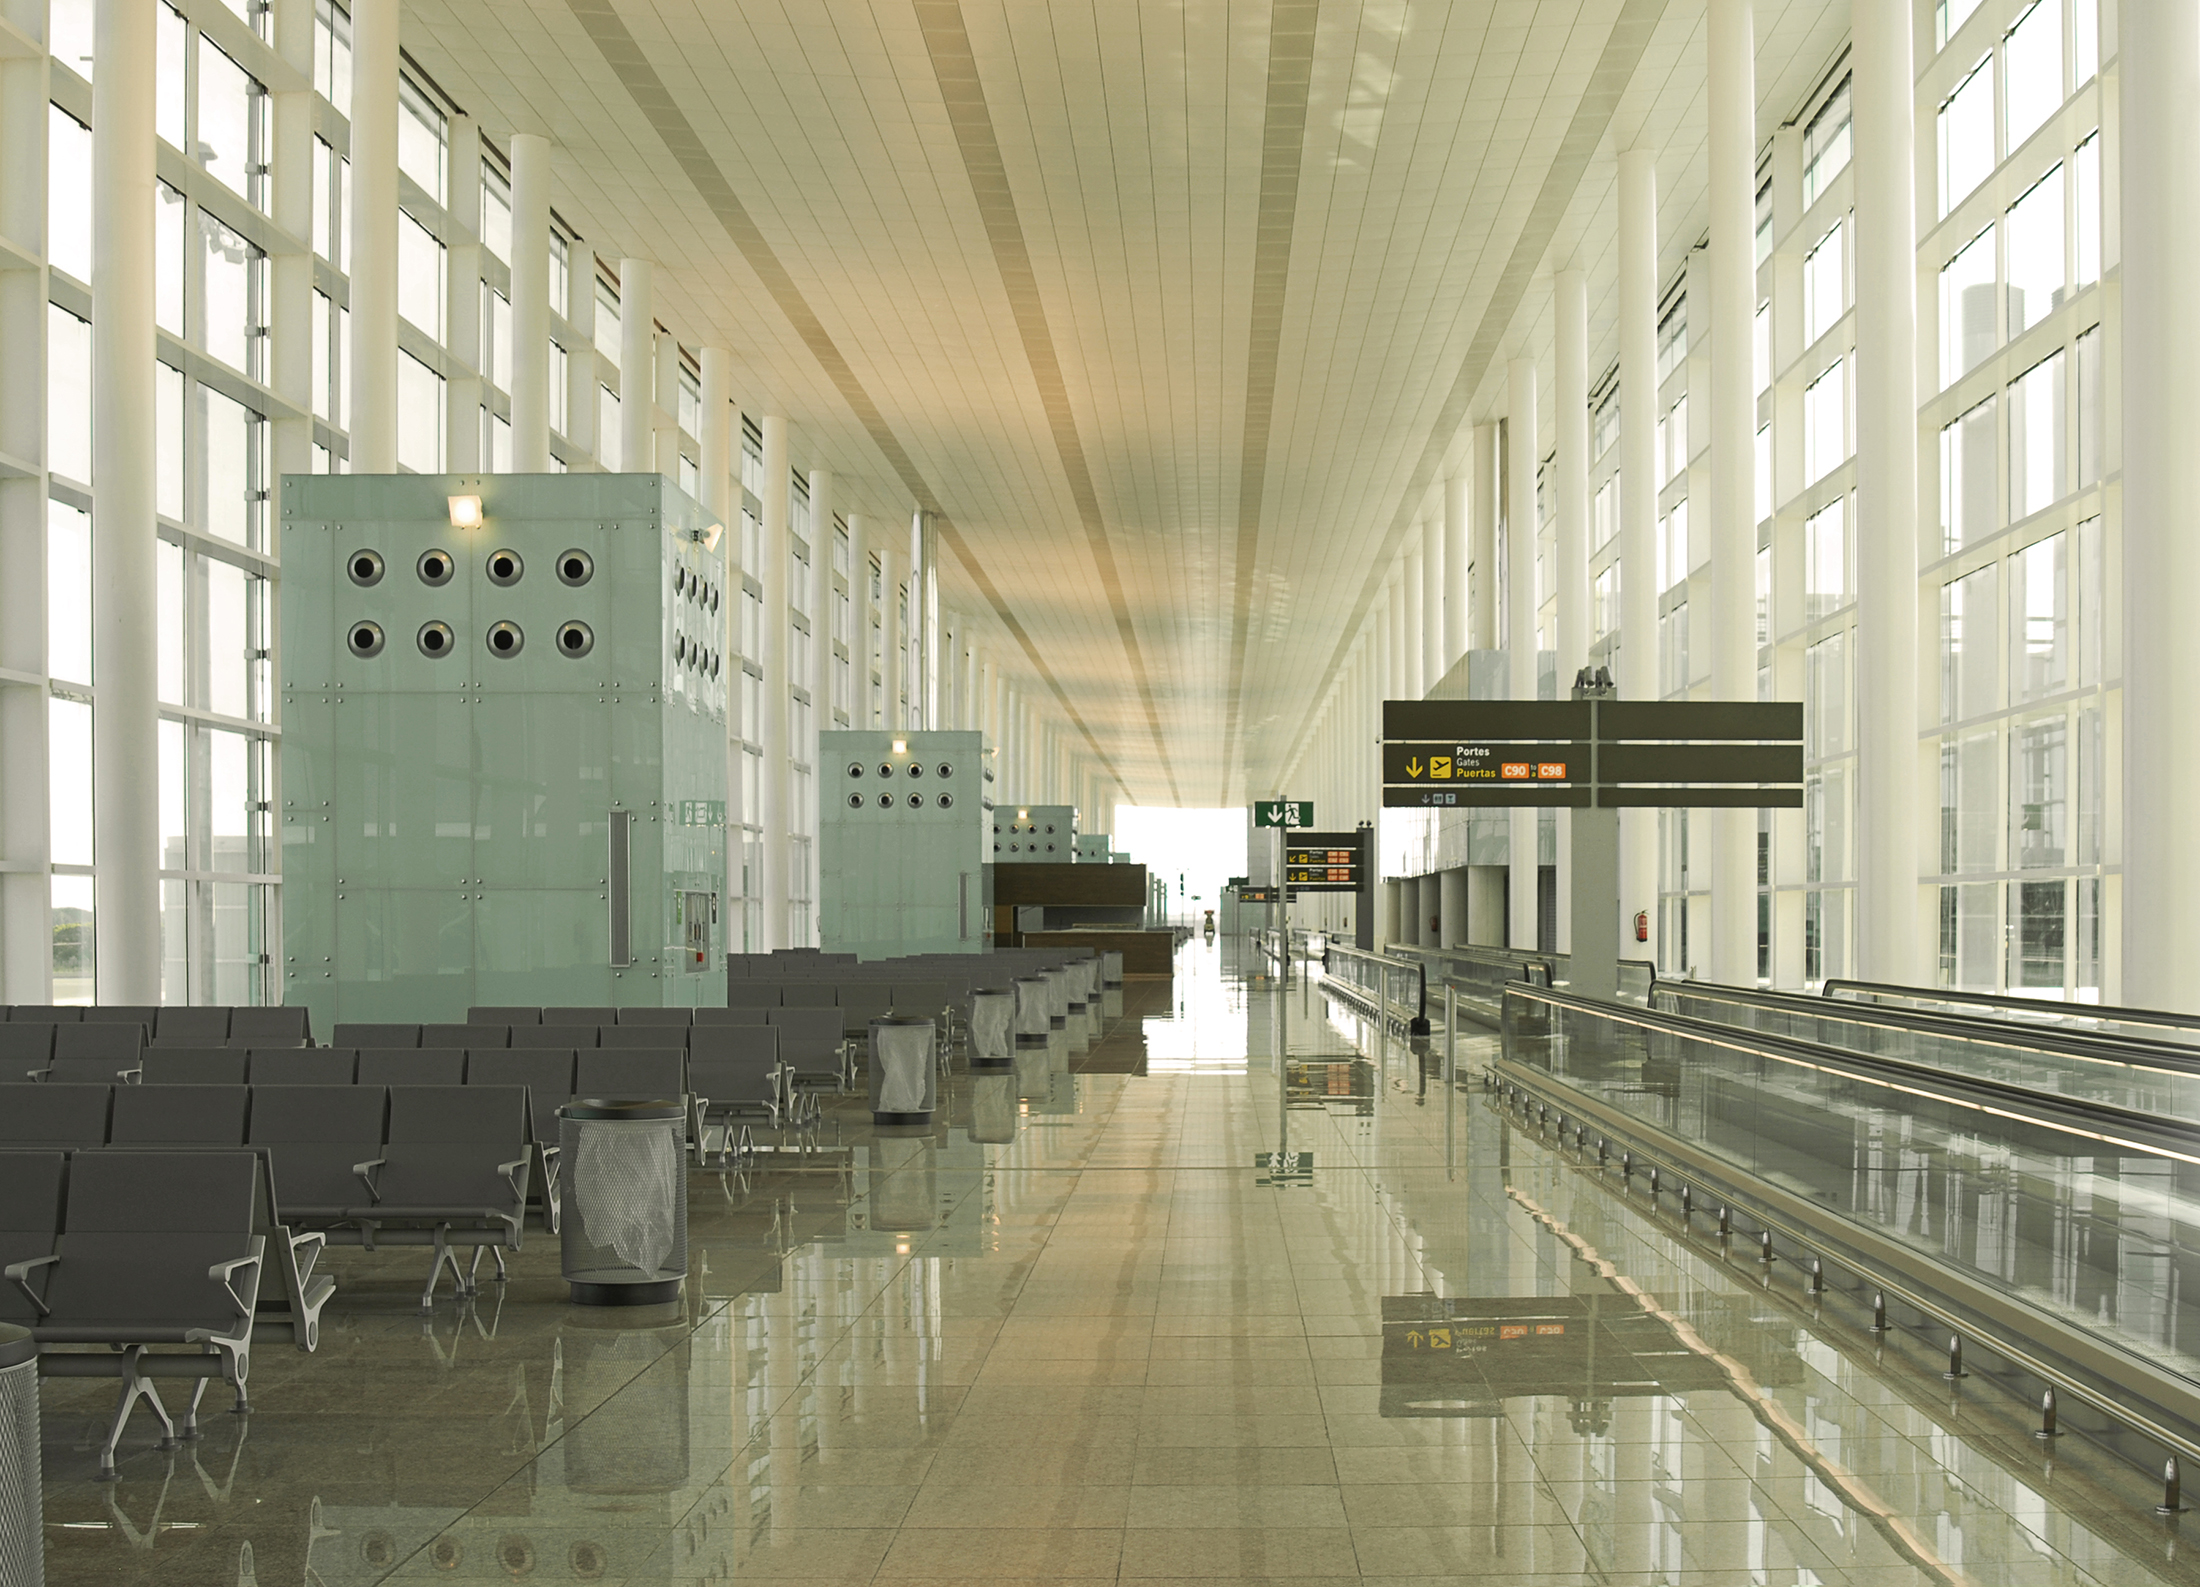 Barcelona Airport – Terminal 1